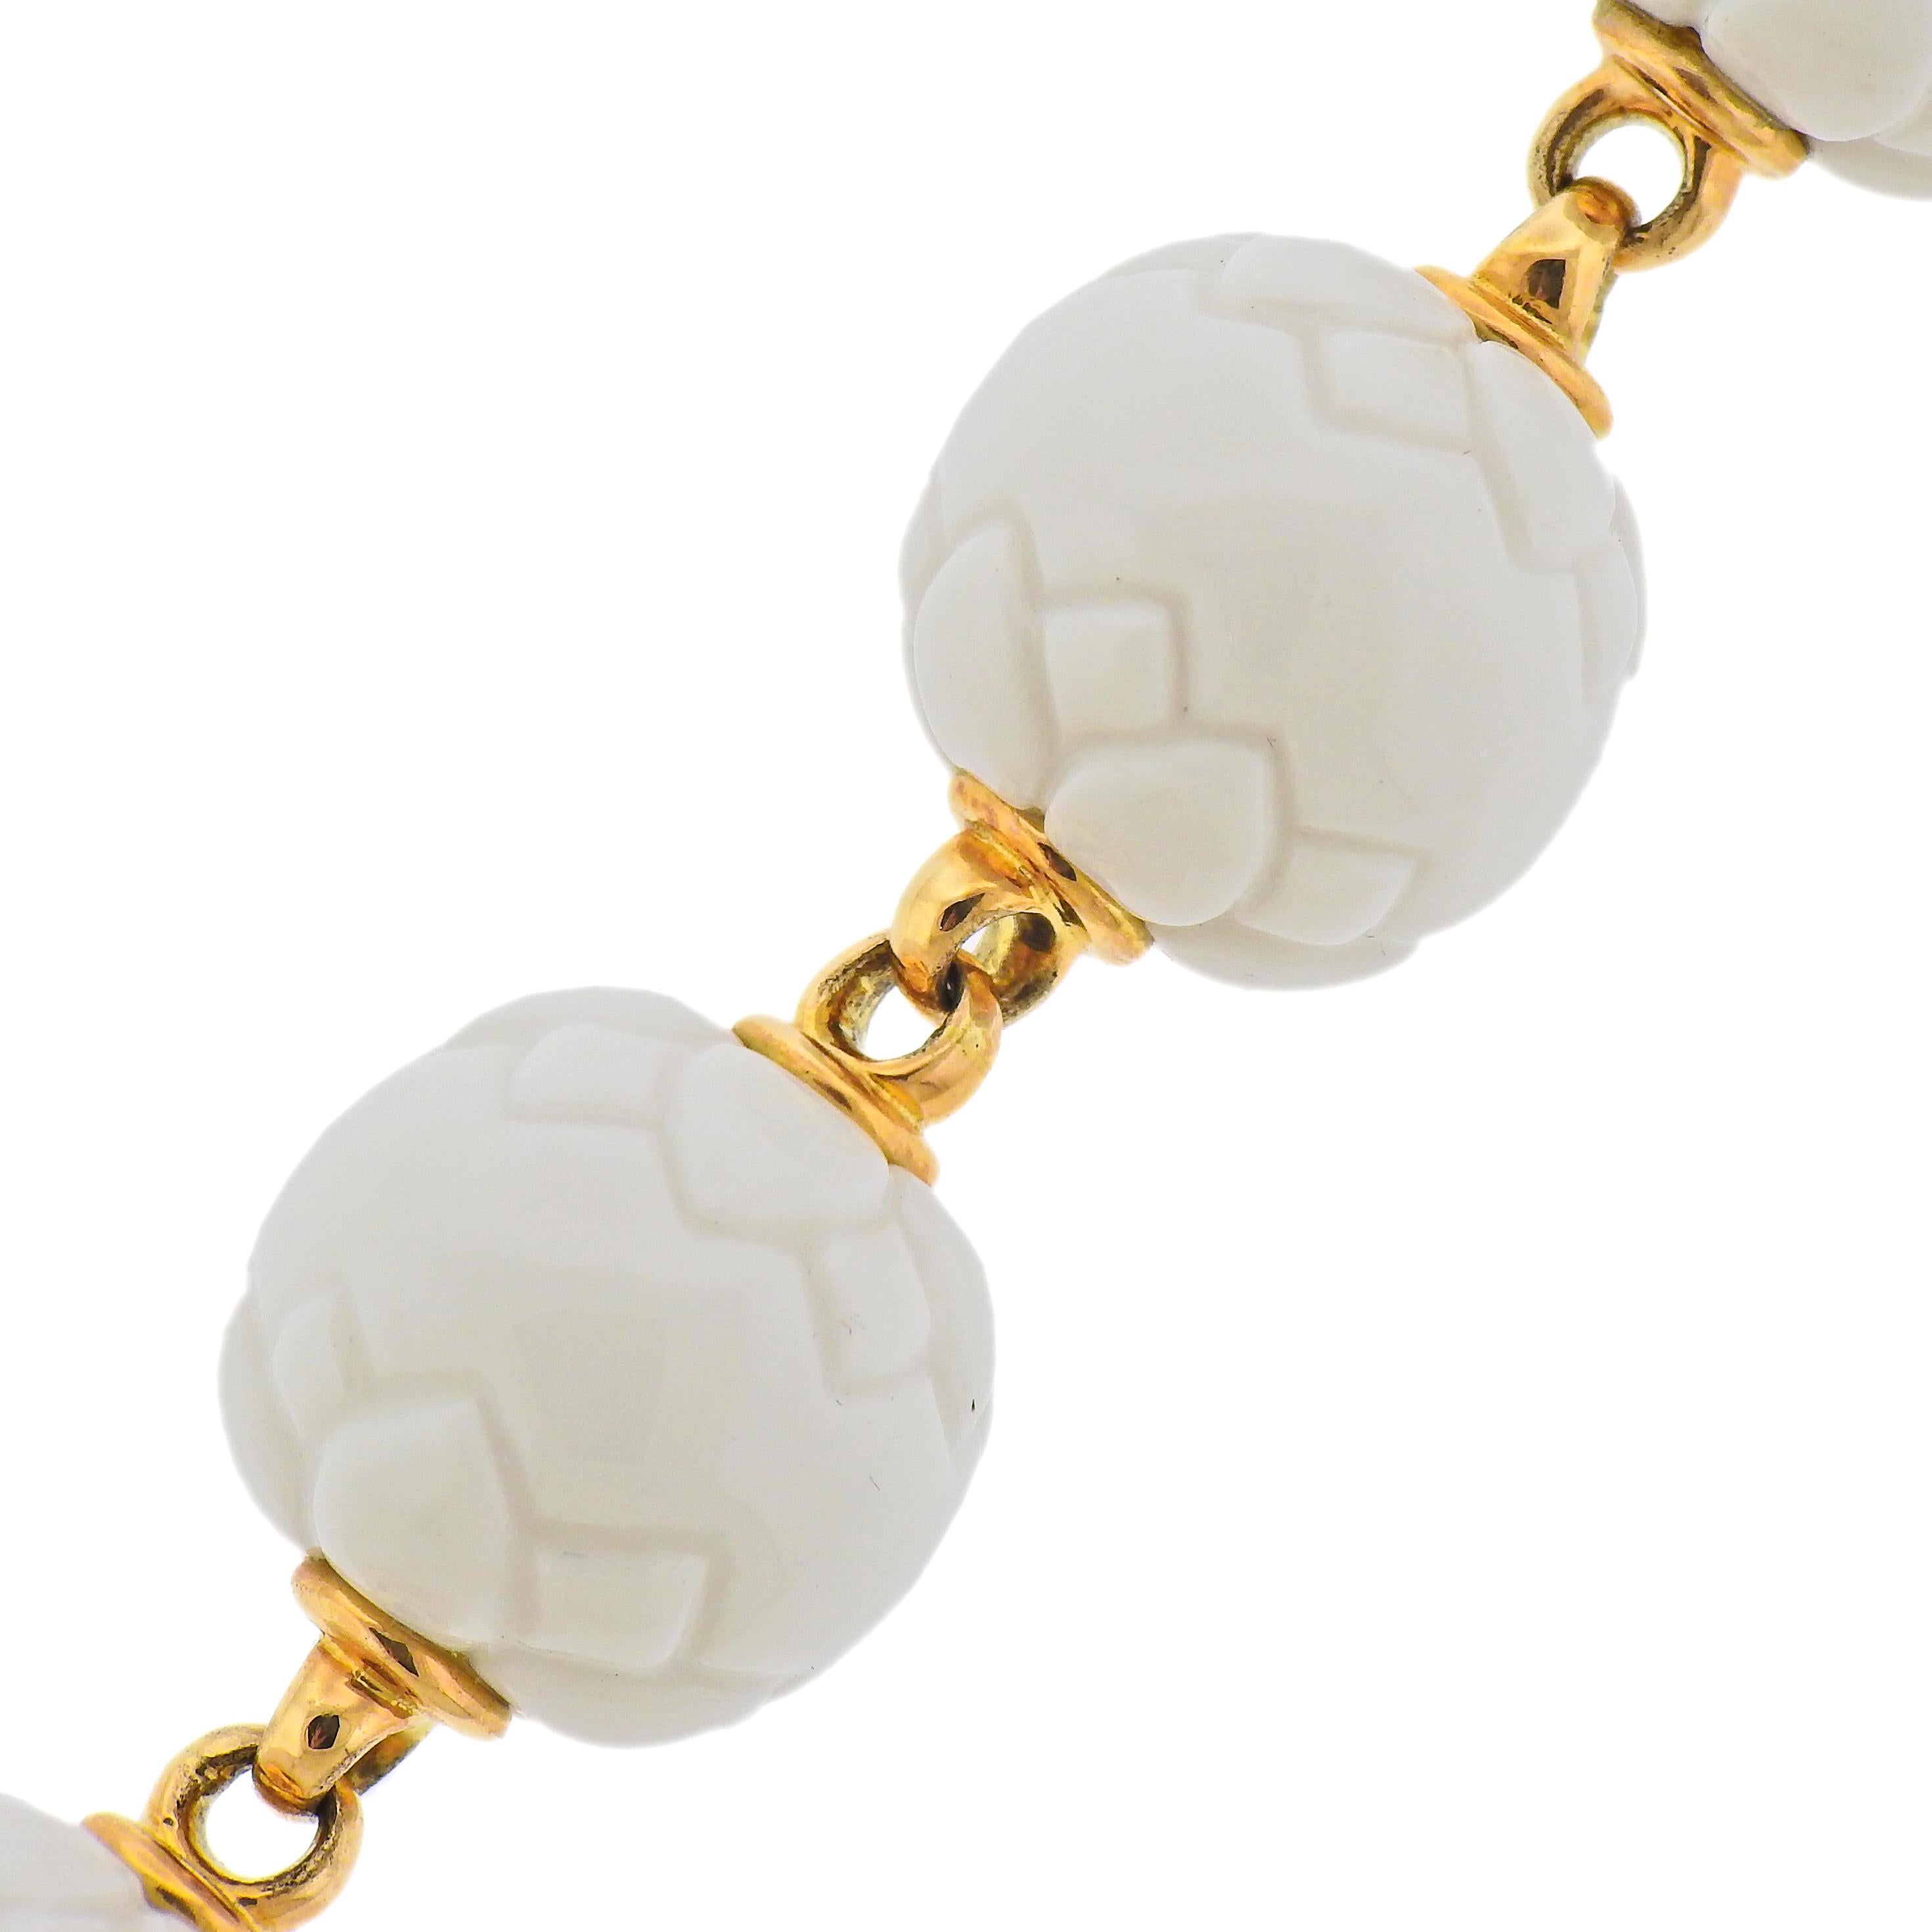 Bvlgari 18k gold bracelet with white ceramic balls. Bracelet is 8.5